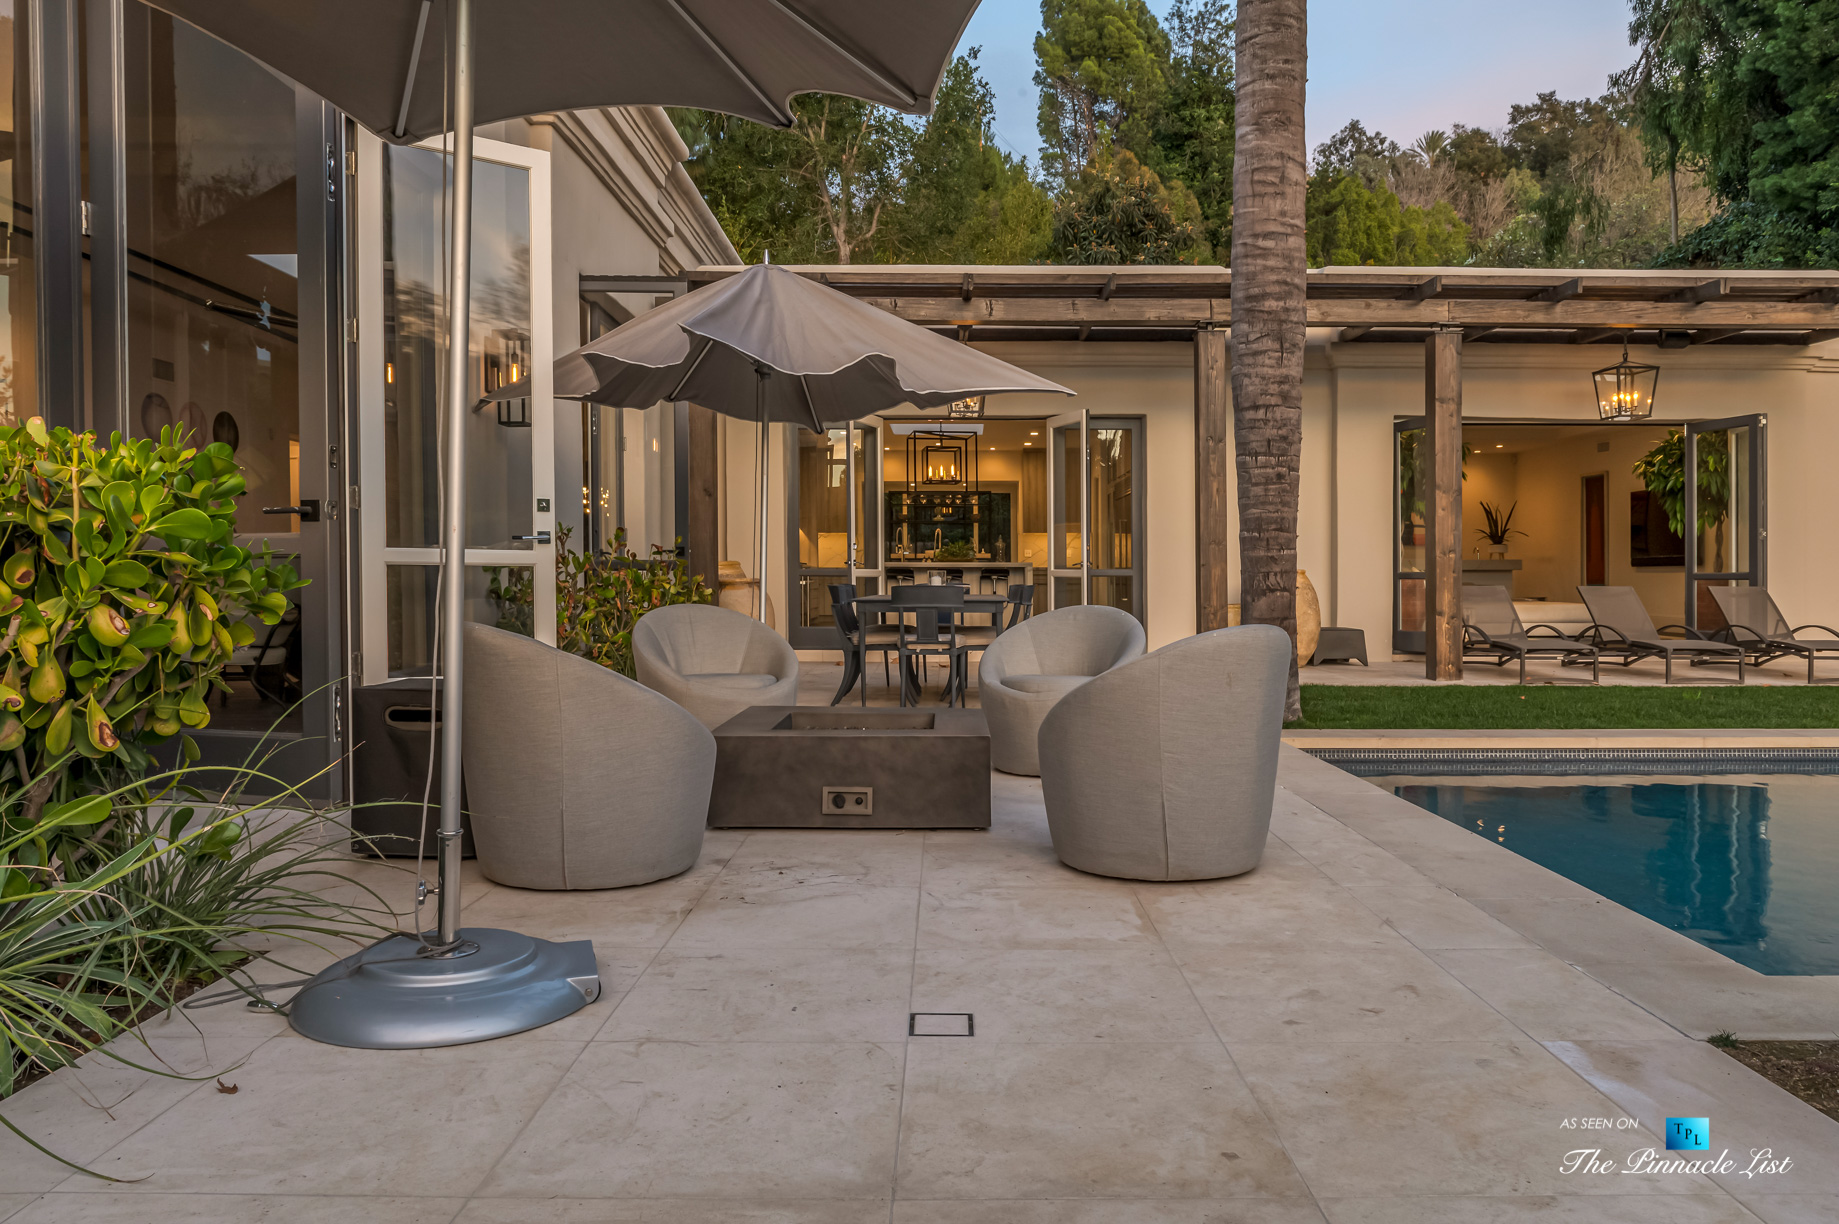 2720 Ellison Dr, Beverly Hills, CA, USA – Deck Umbrellas Next to Pool – Luxury Real Estate – Italian Villa Hilltop Home